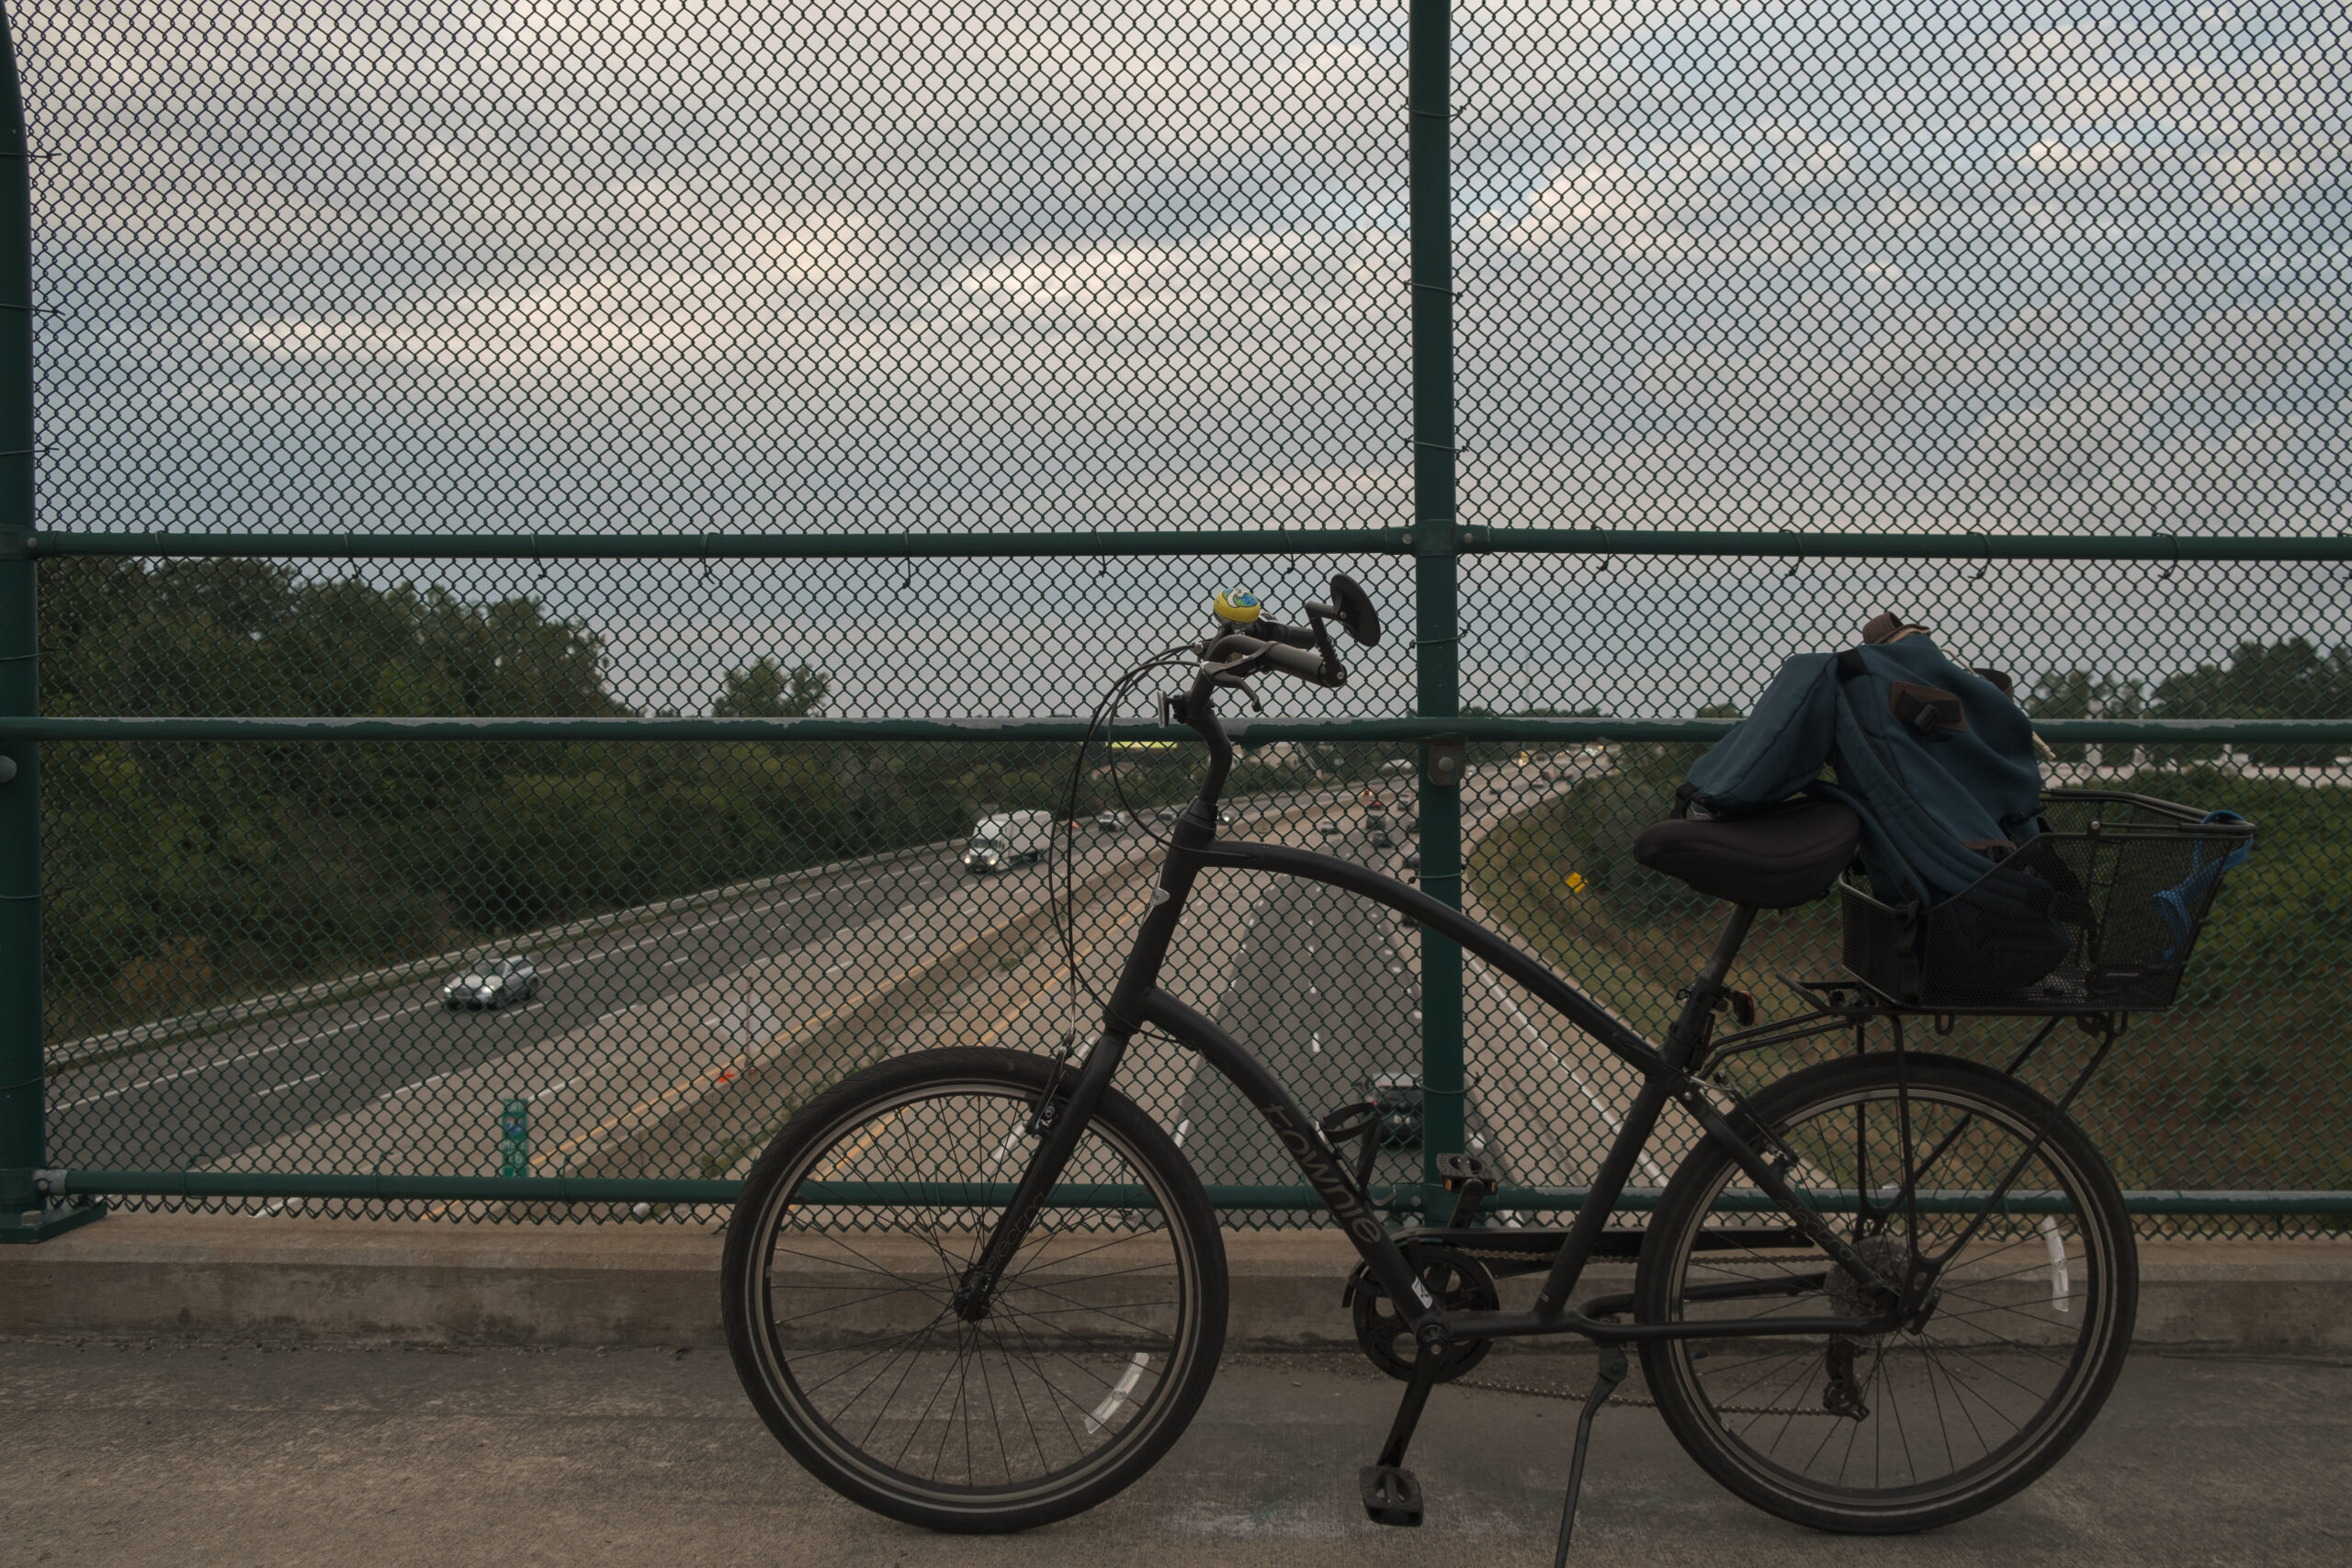 Bike on a highway overpass